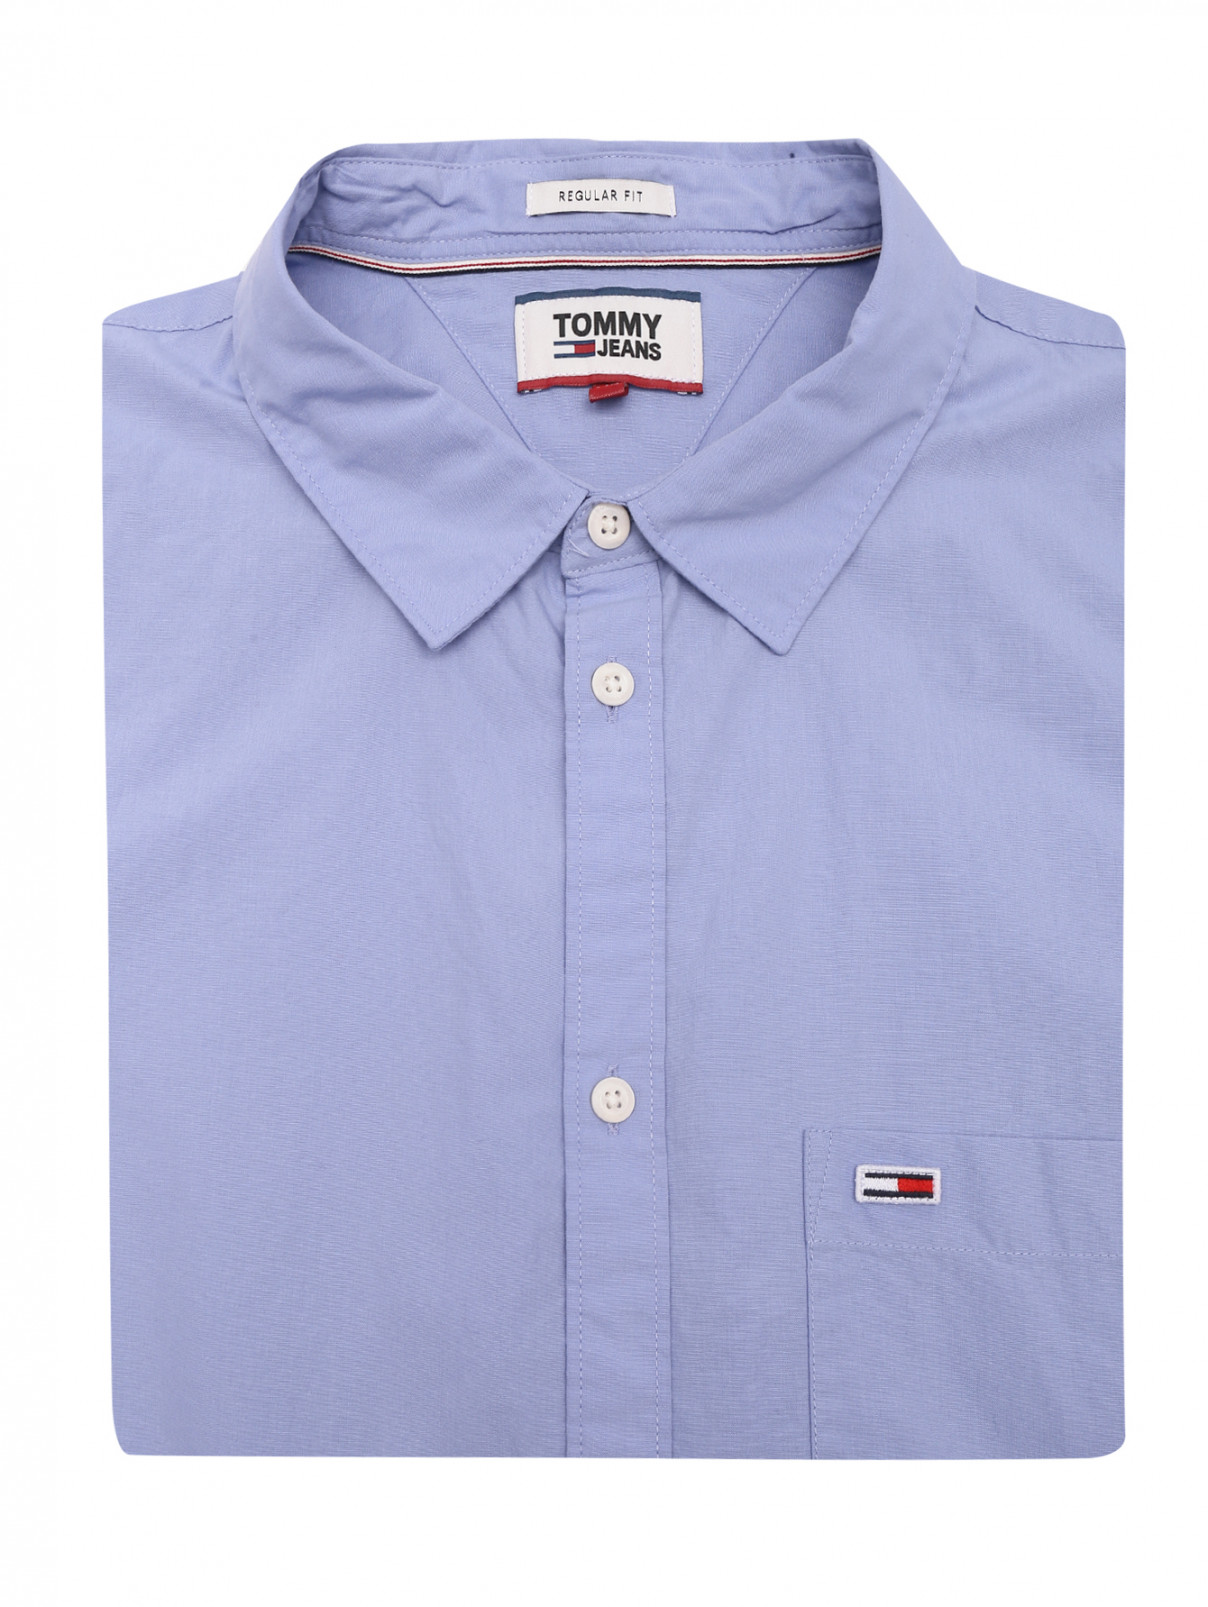 Рубашка из хлопка с коротким рукавом Tommy Jeans  –  Общий вид  – Цвет:  Синий